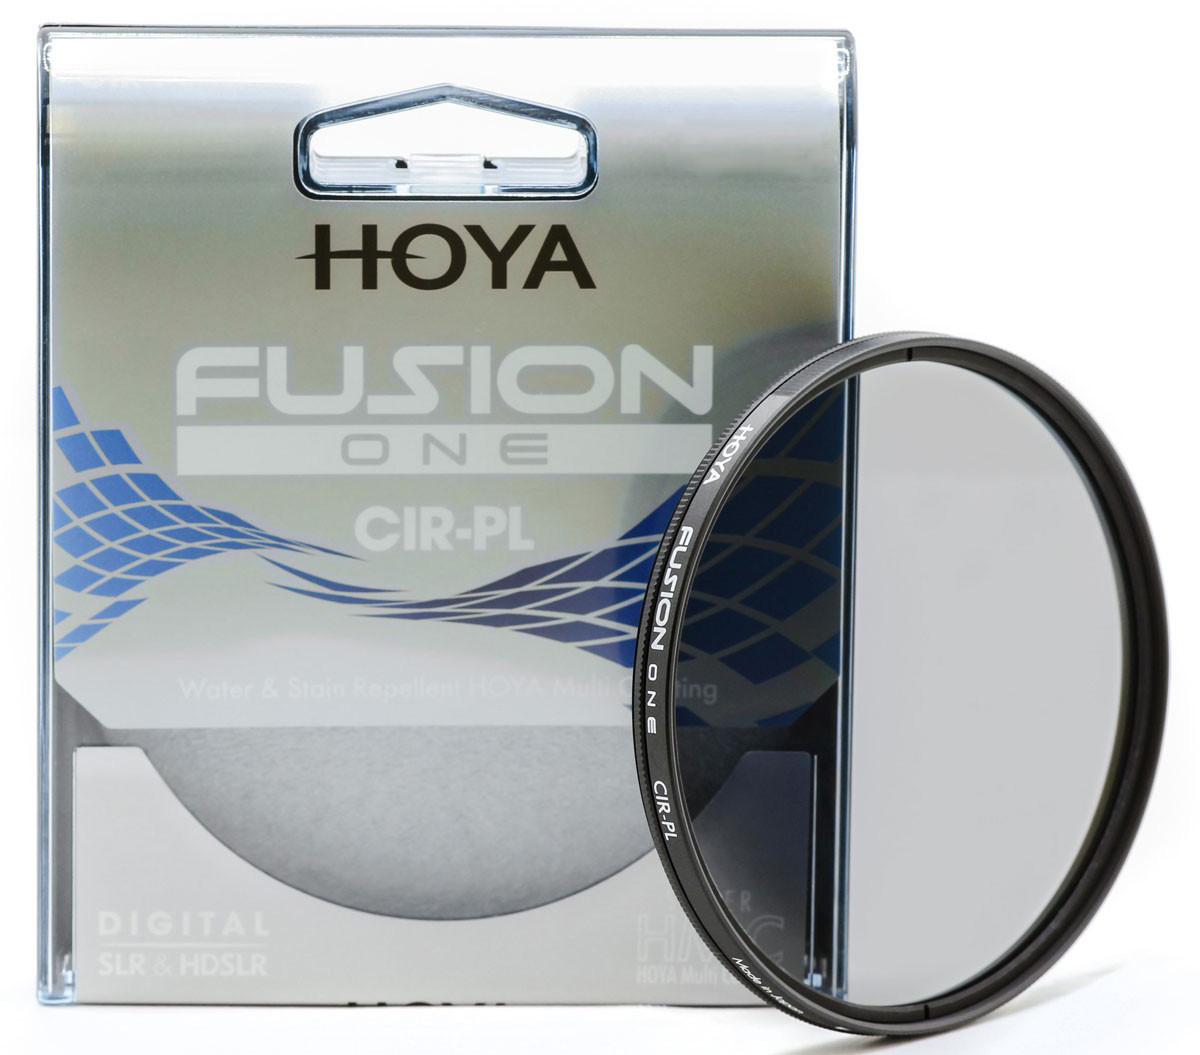 Hoya Fusion One 40.5mm